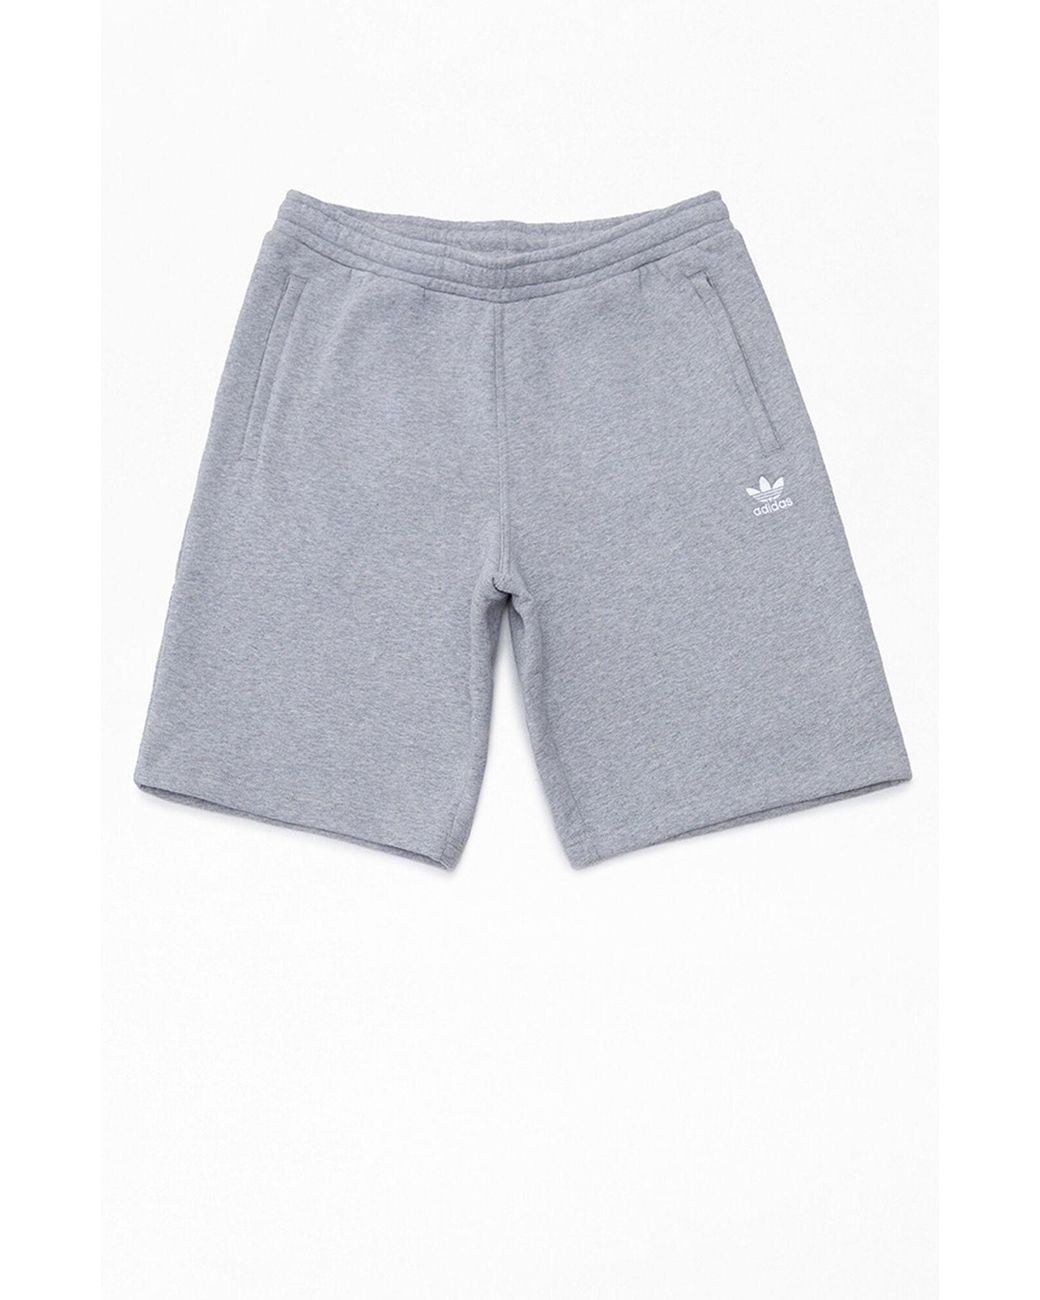 adidas Fleece Light Heather Essentials Sweat Shorts in Gray for Men - Lyst